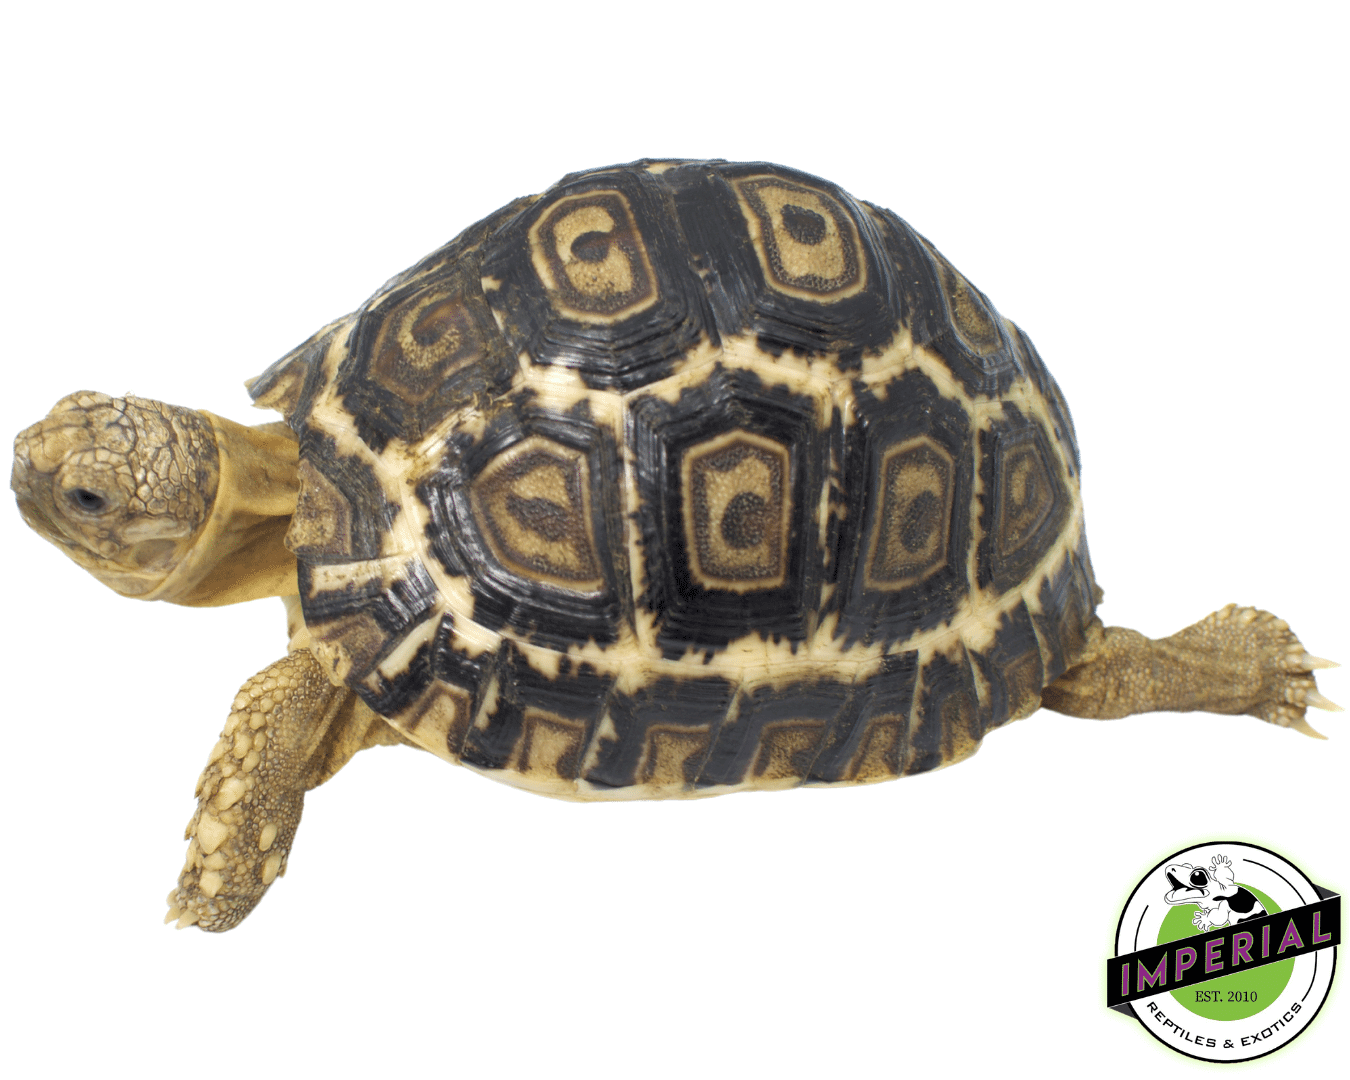 blonde leopard tortoise for sale, buy reptiles online